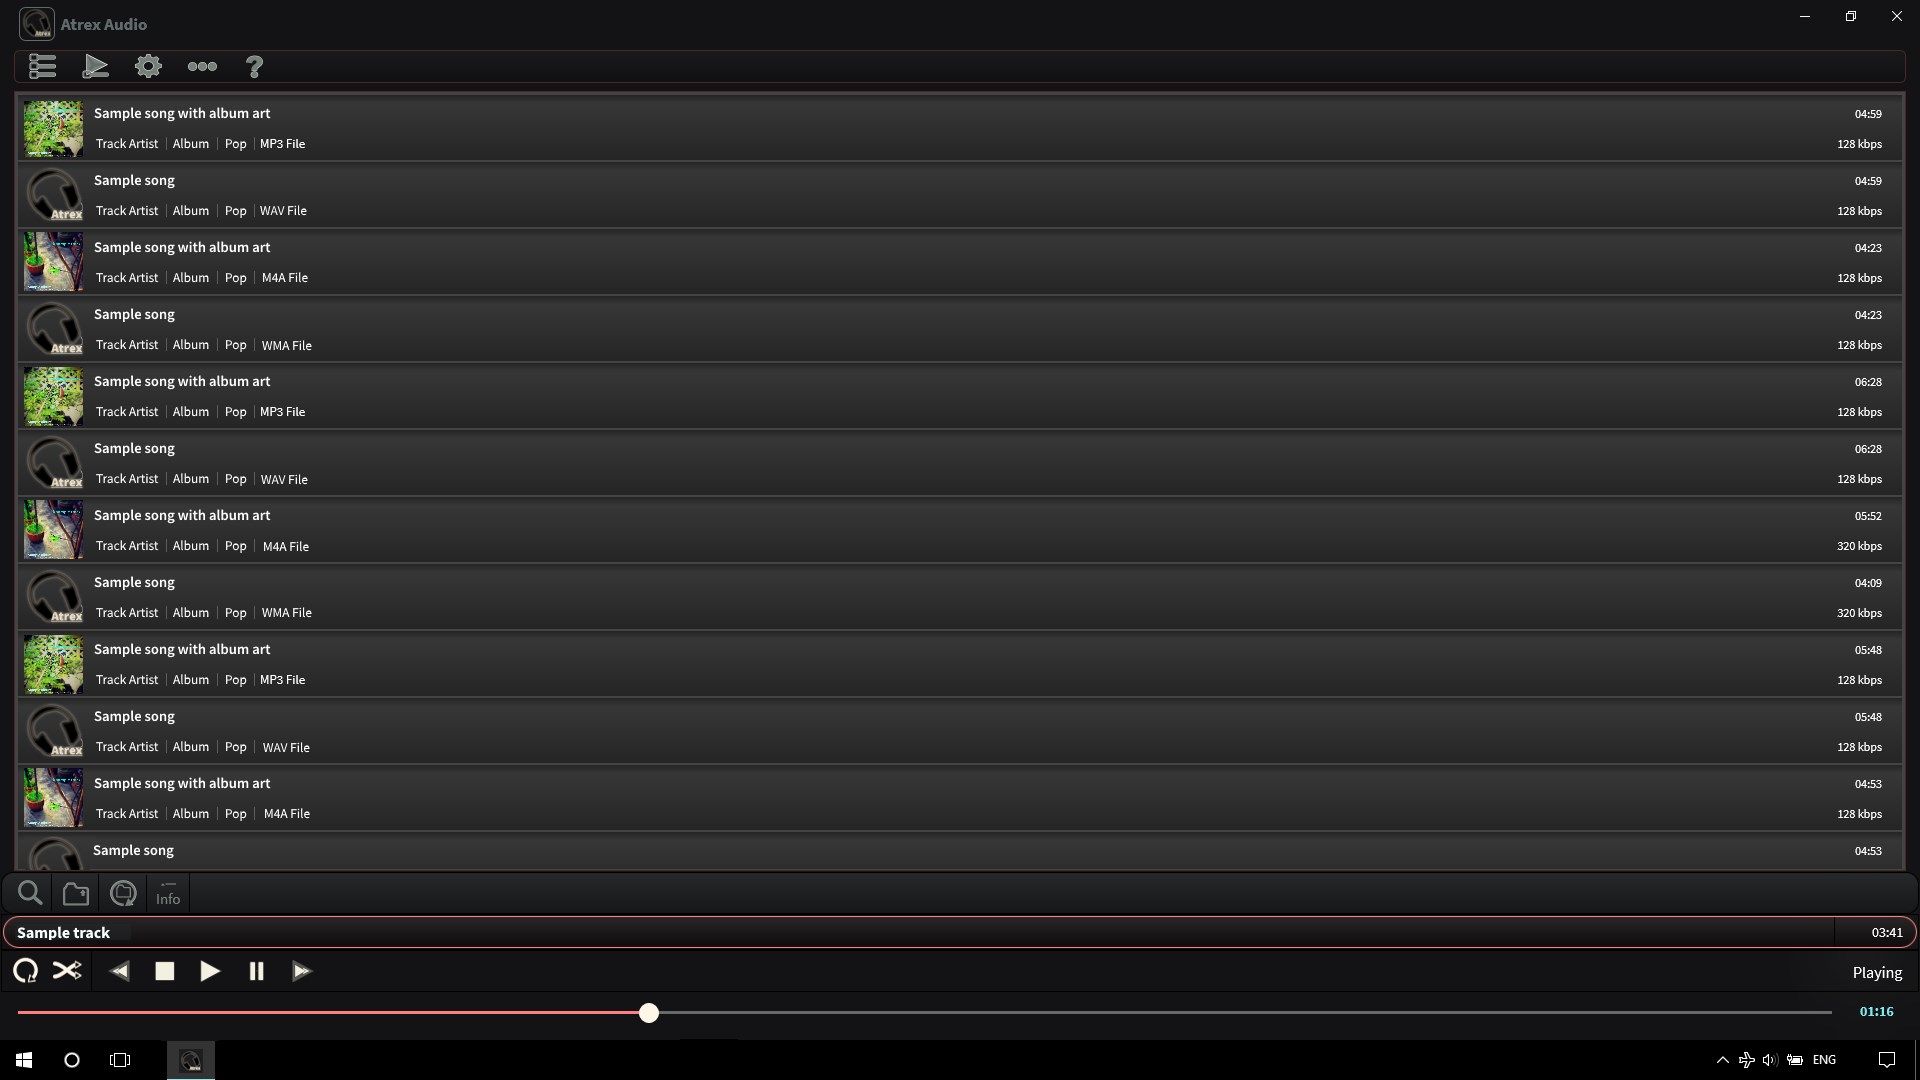 Atrex audio full screen.
Show track list view.